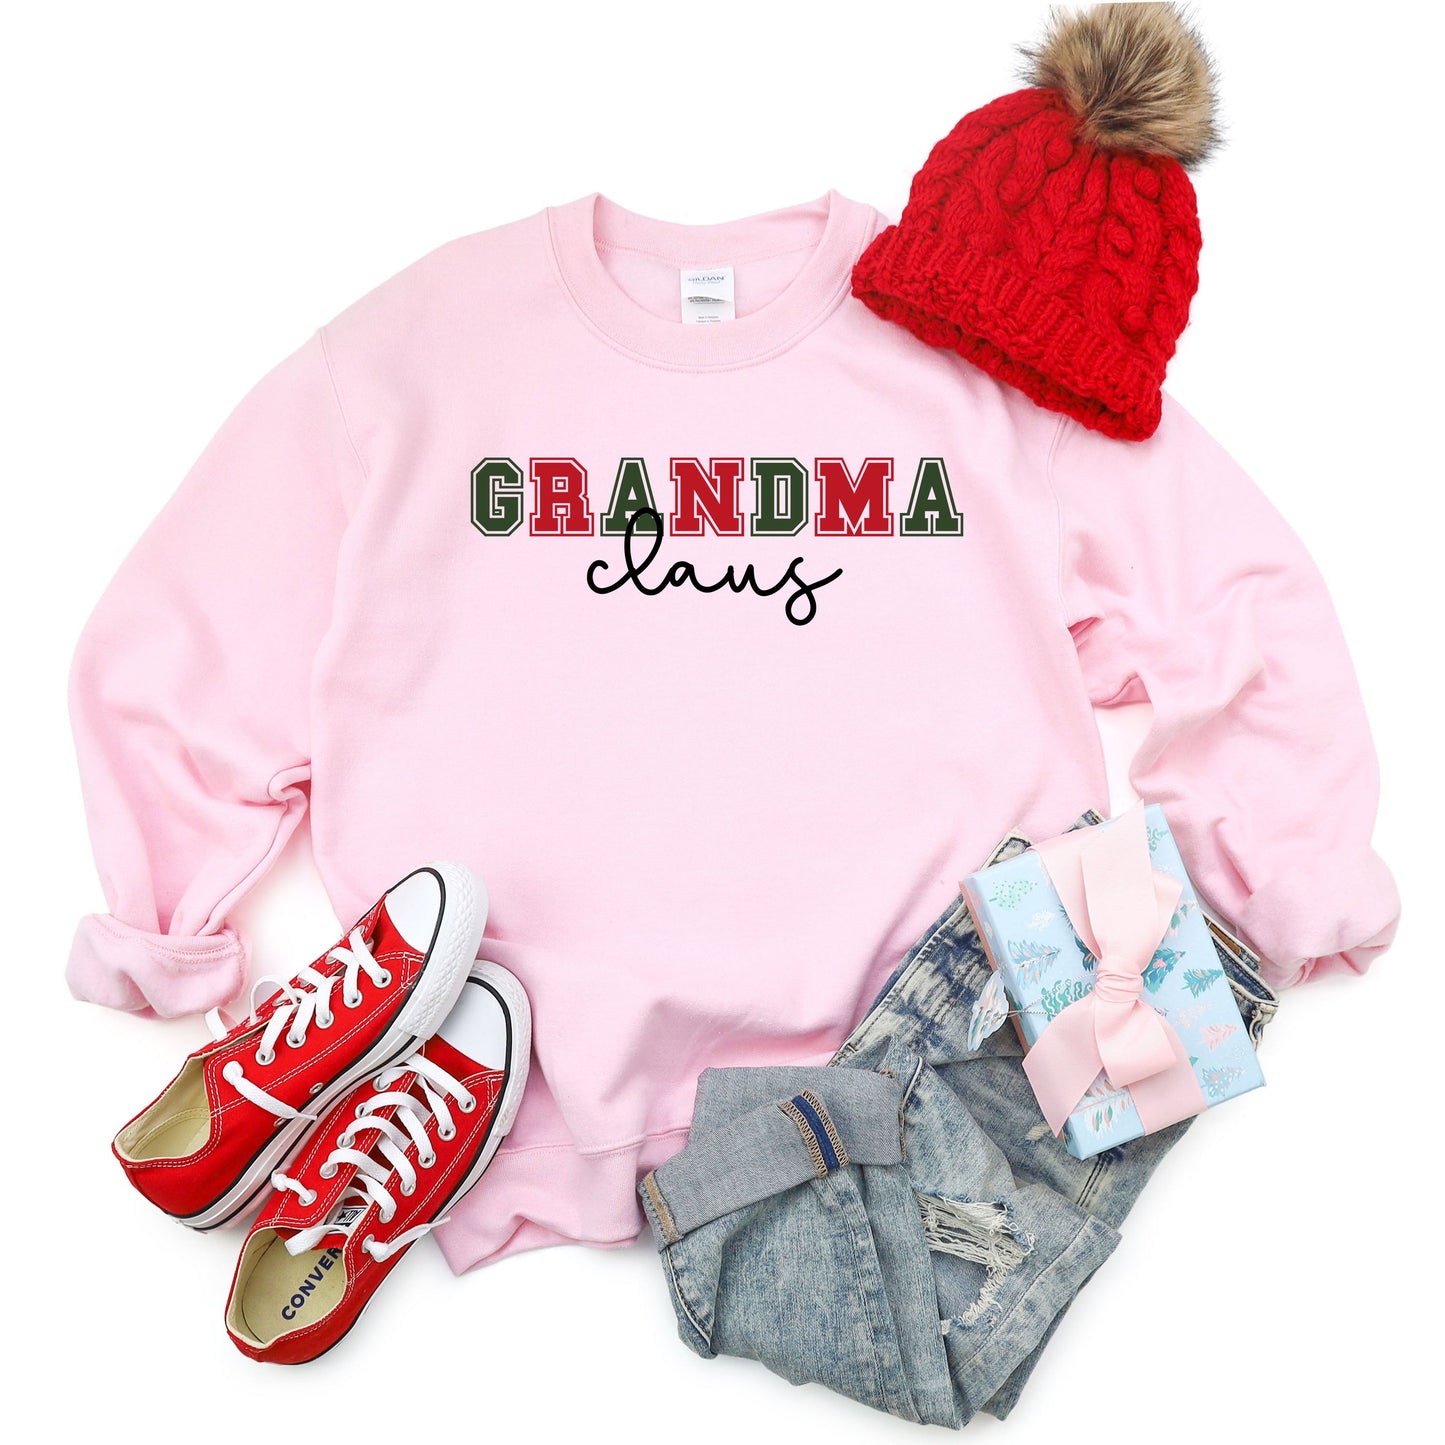 Grandma Claus |Sweatshirt